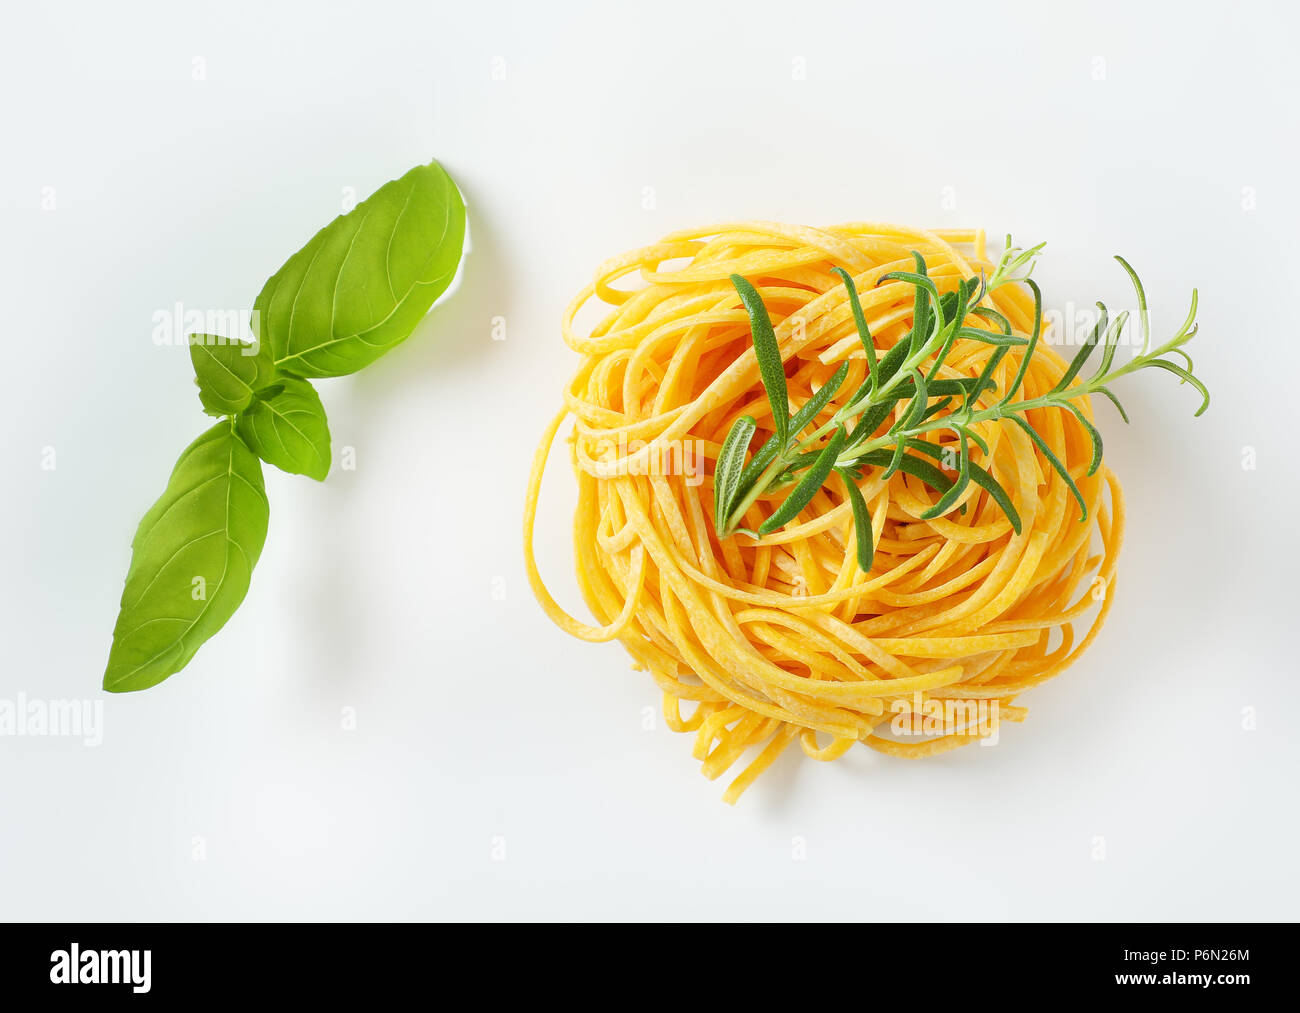 bundle of spaghetti pasta and fresh herbs on white background Stock Photo